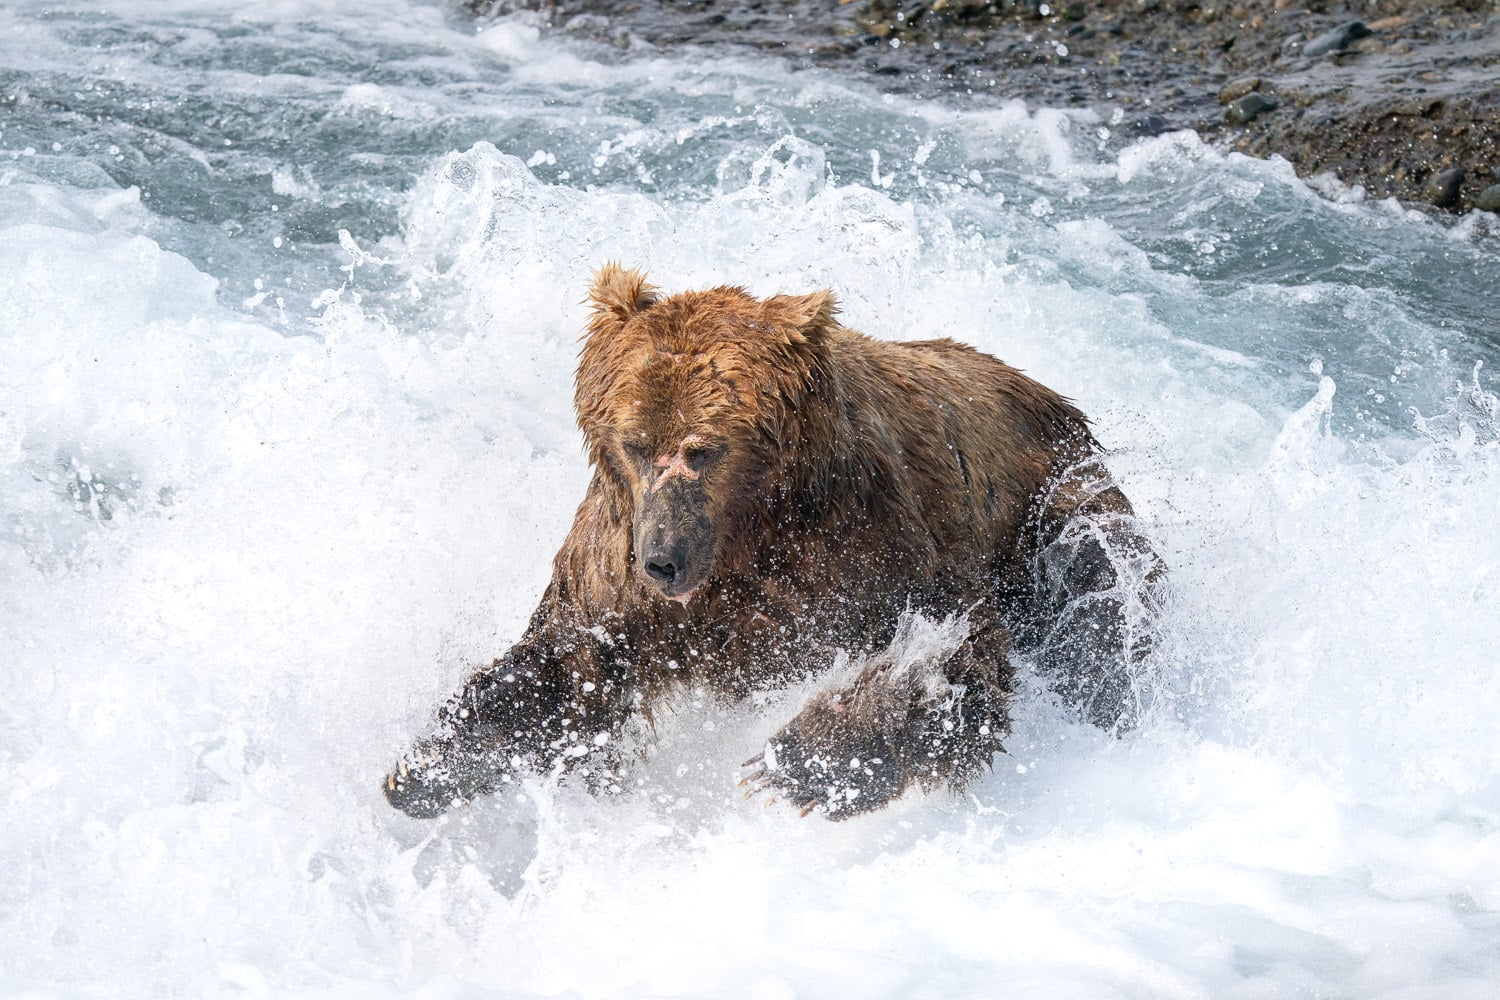 Brown Bear McNeil River Alaska Diving Sony 200-600